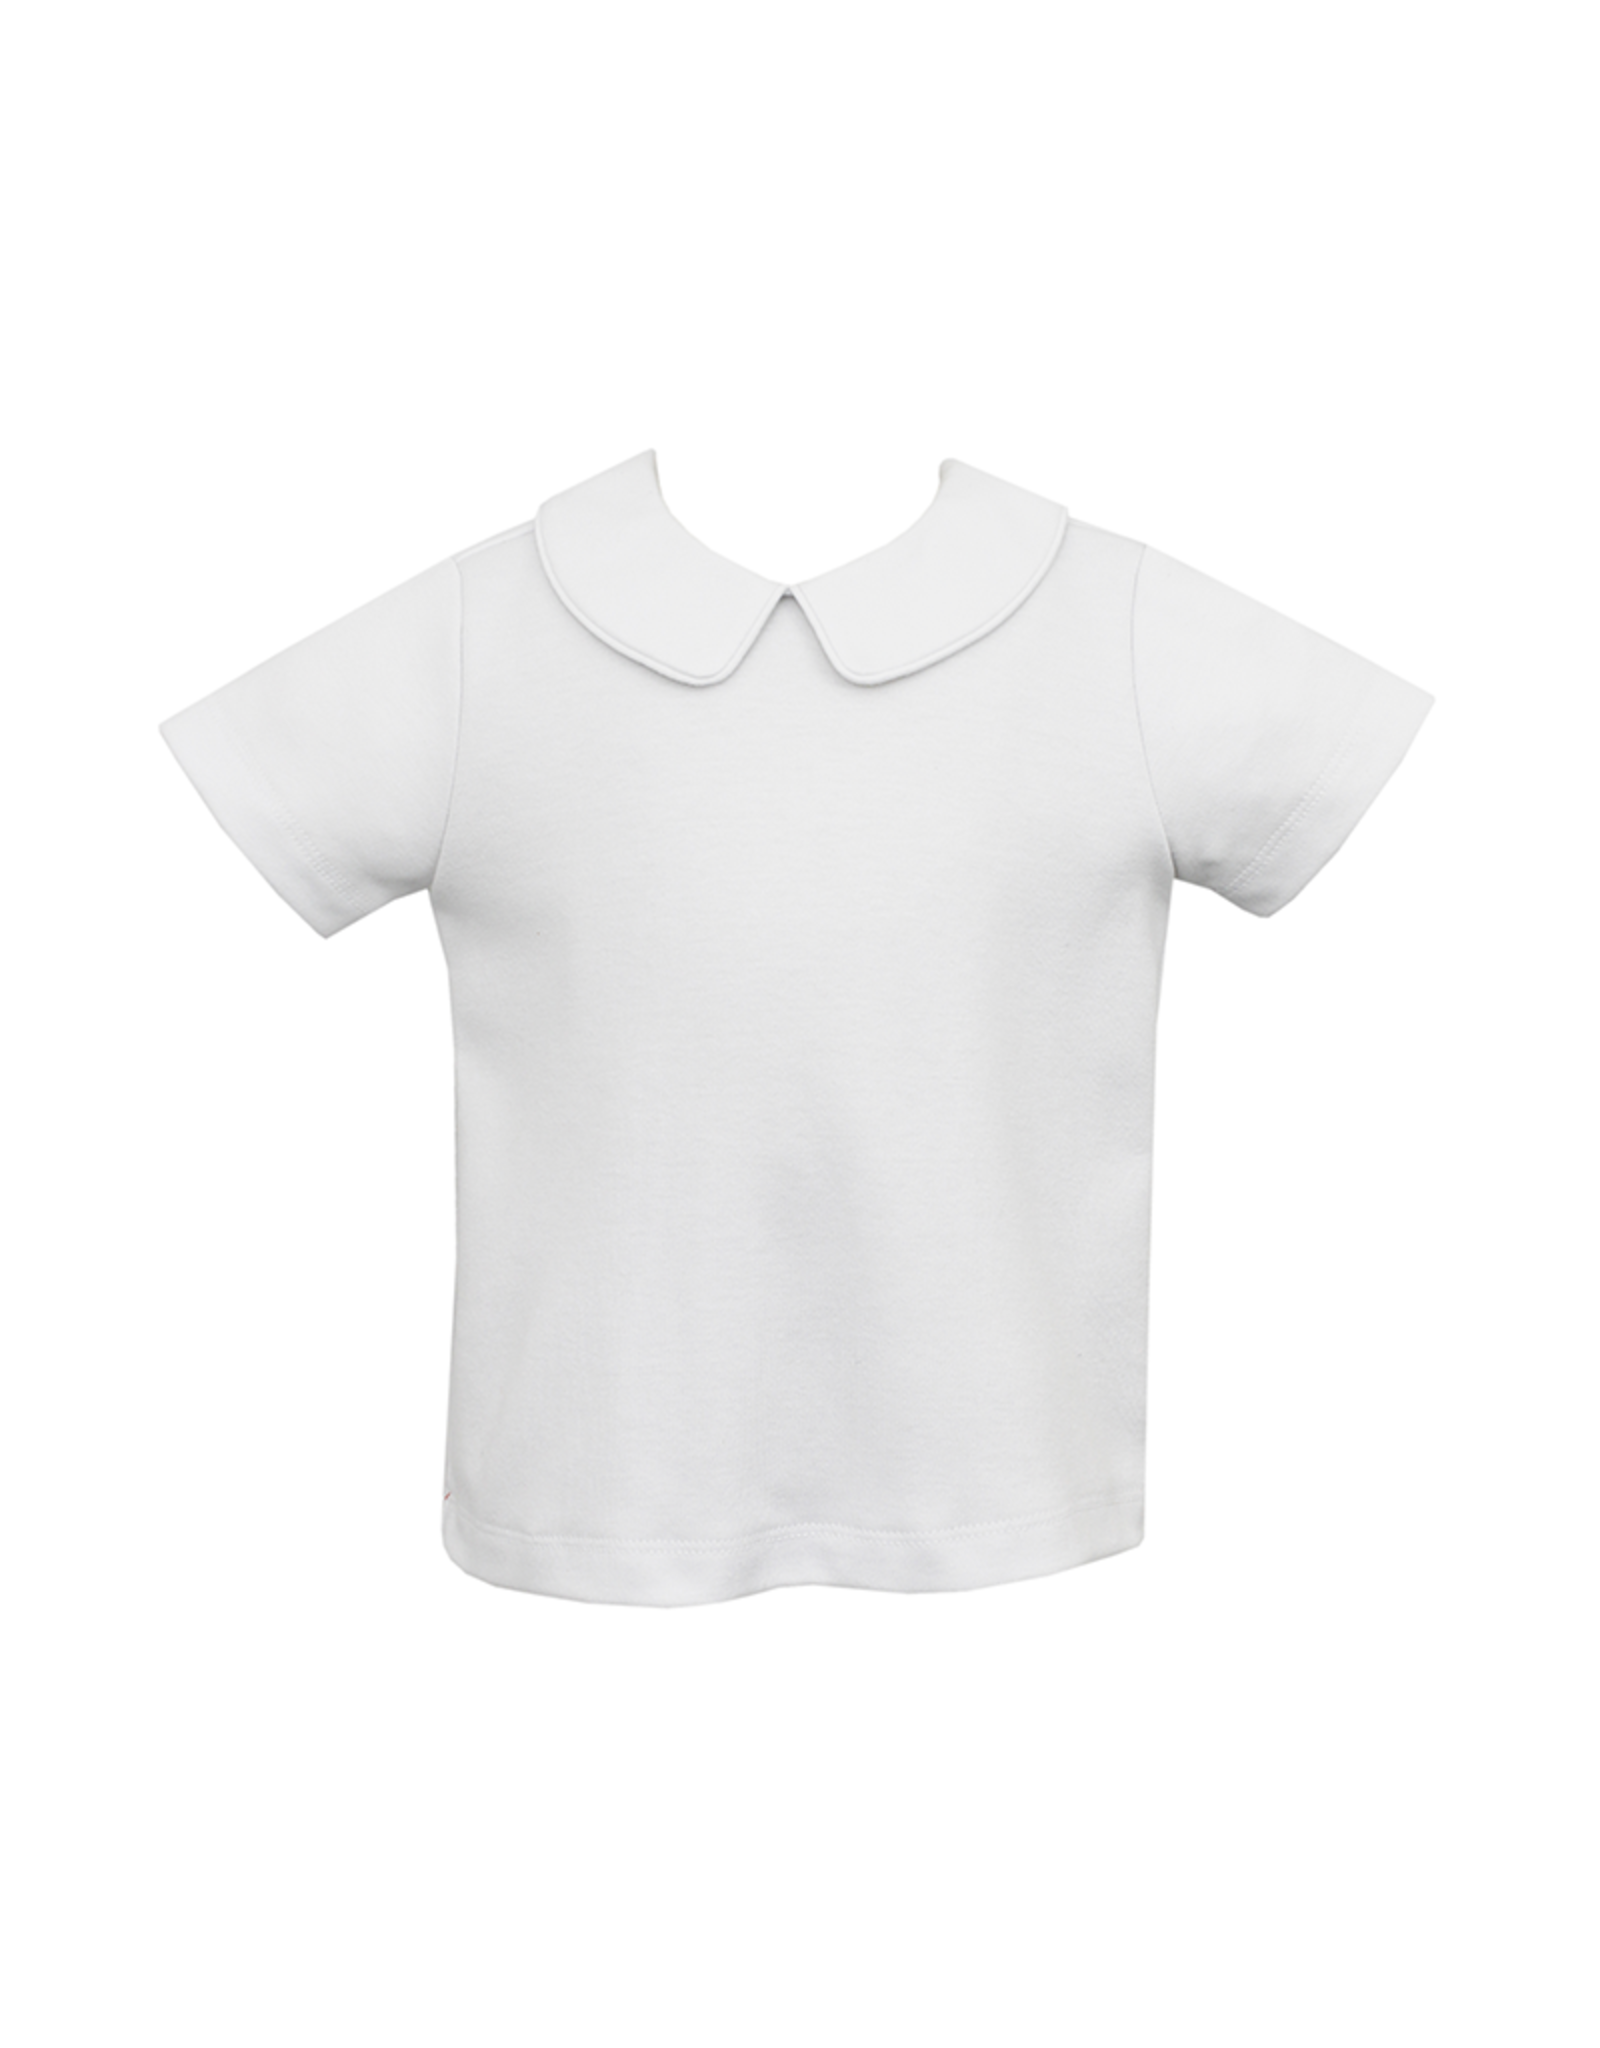 Petit Bebe 187S White Shirt Button Back